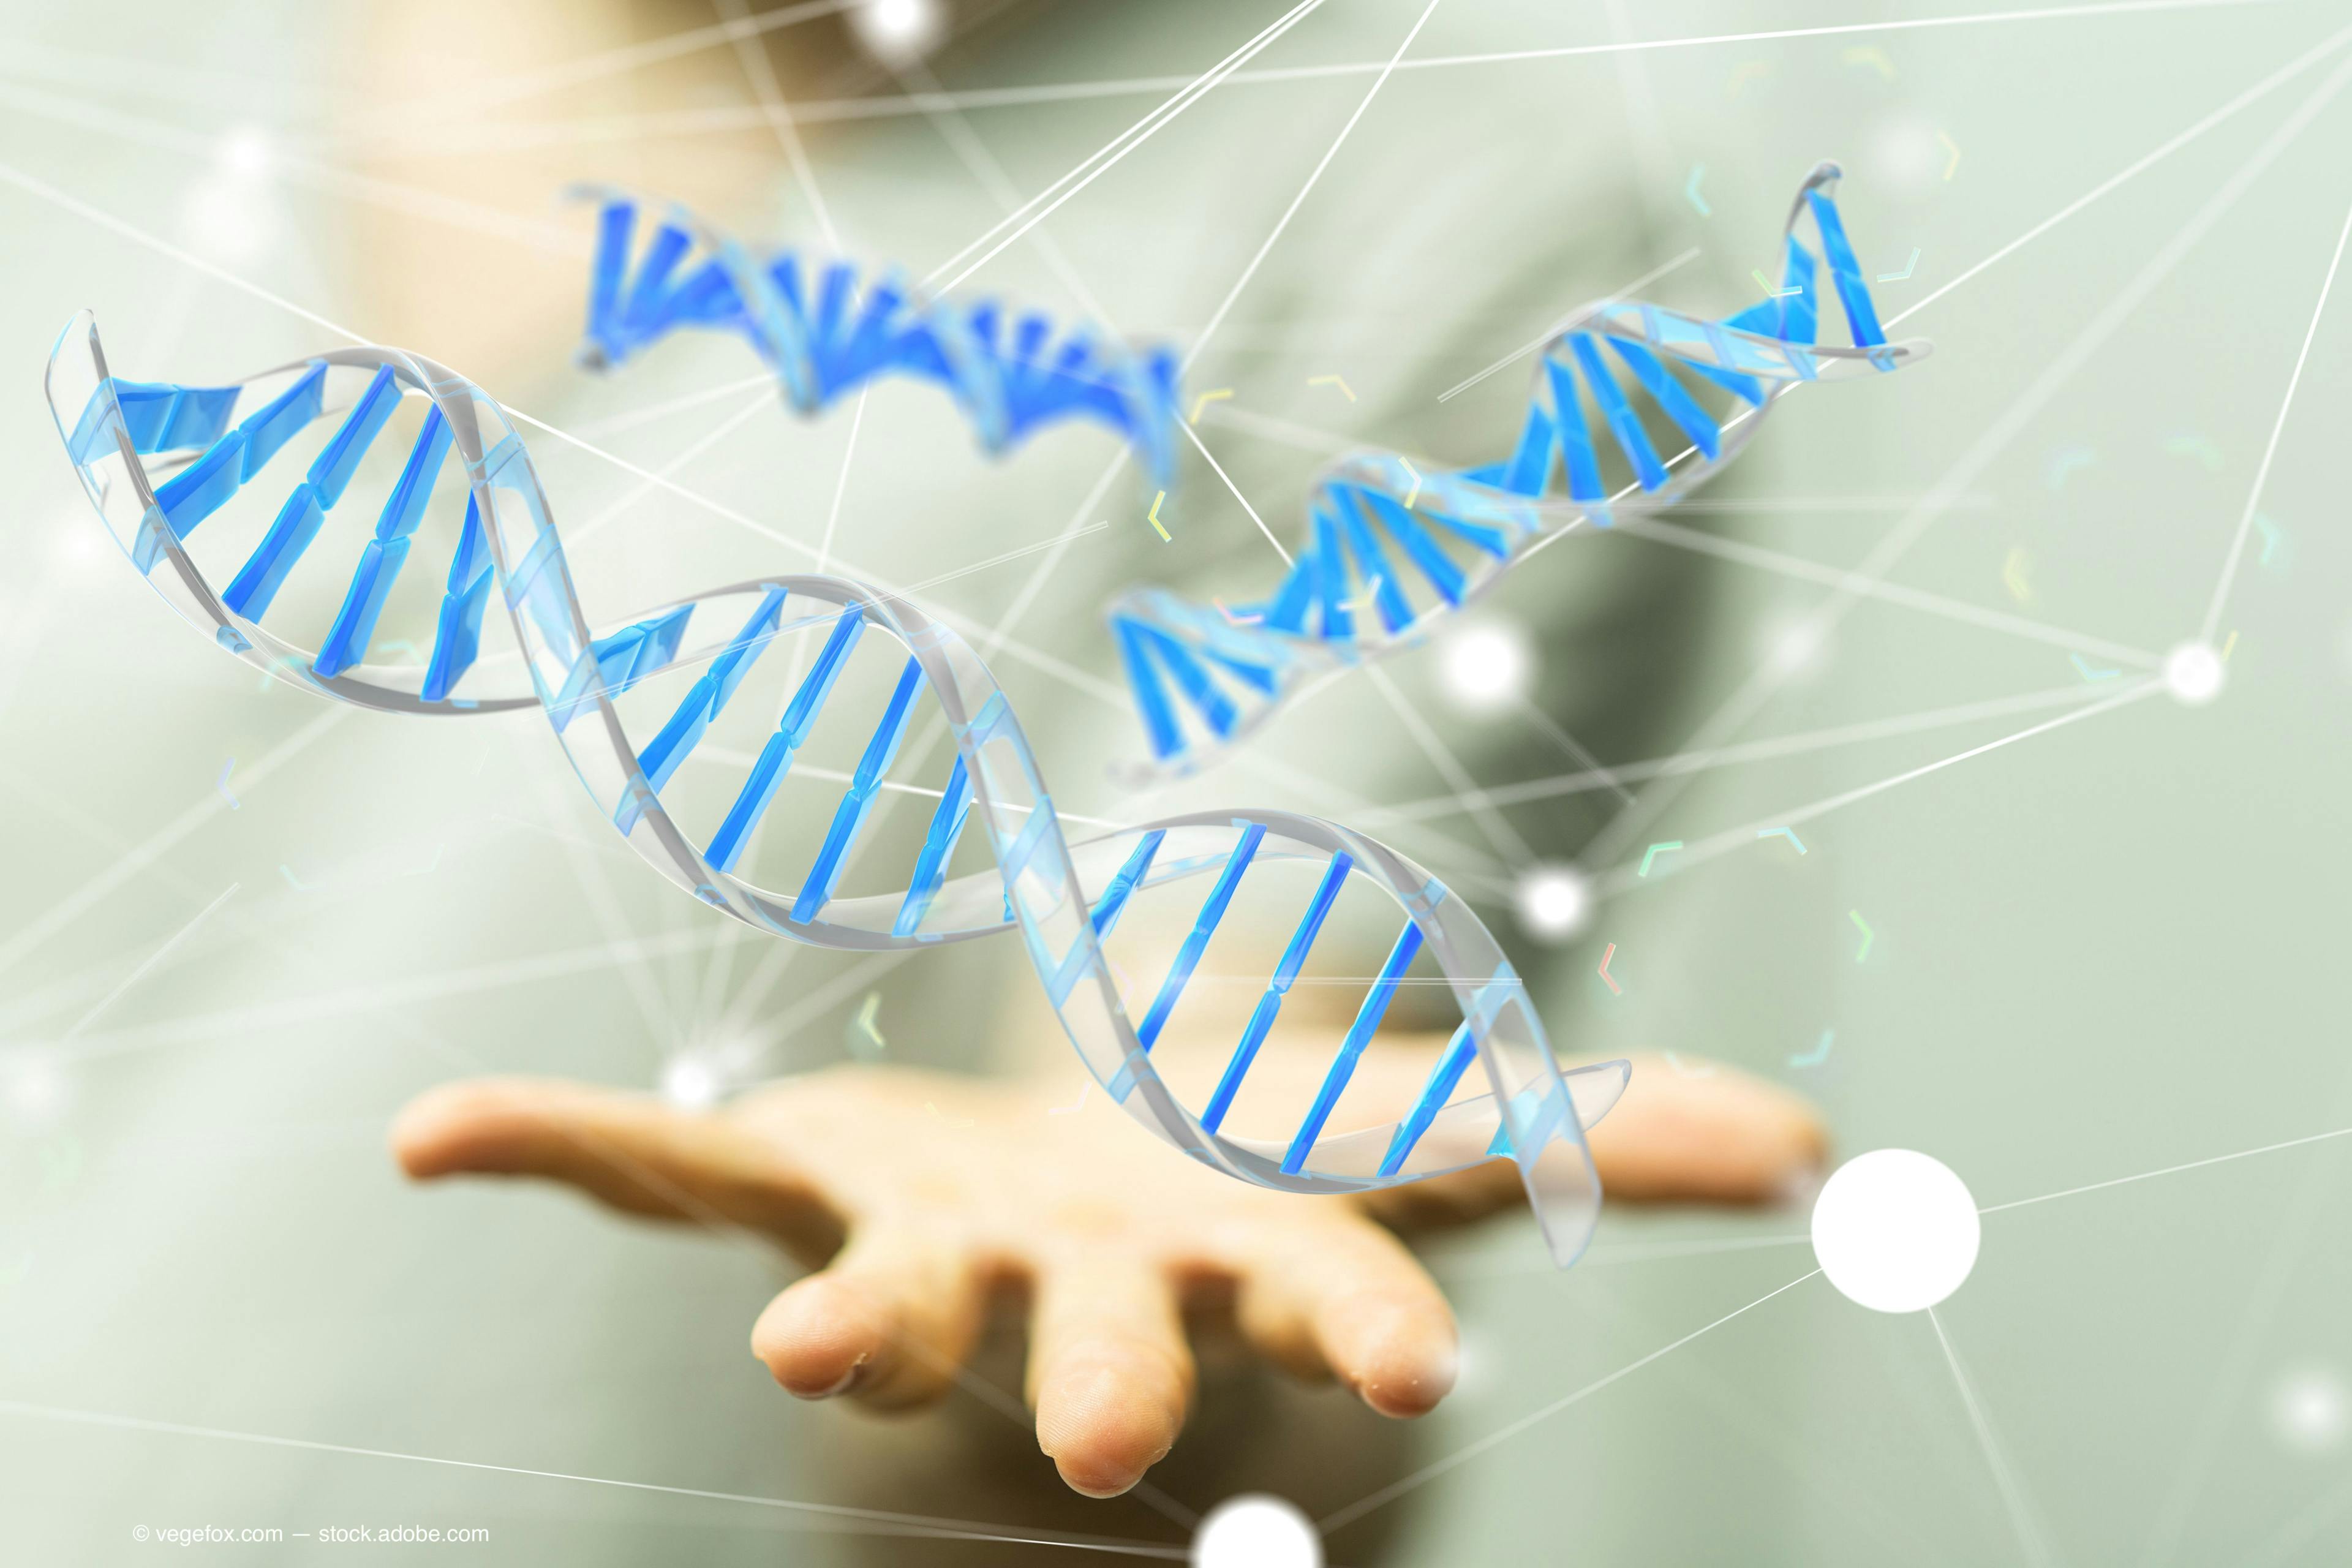 Investigators start pivotal subretinal gene therapy trial